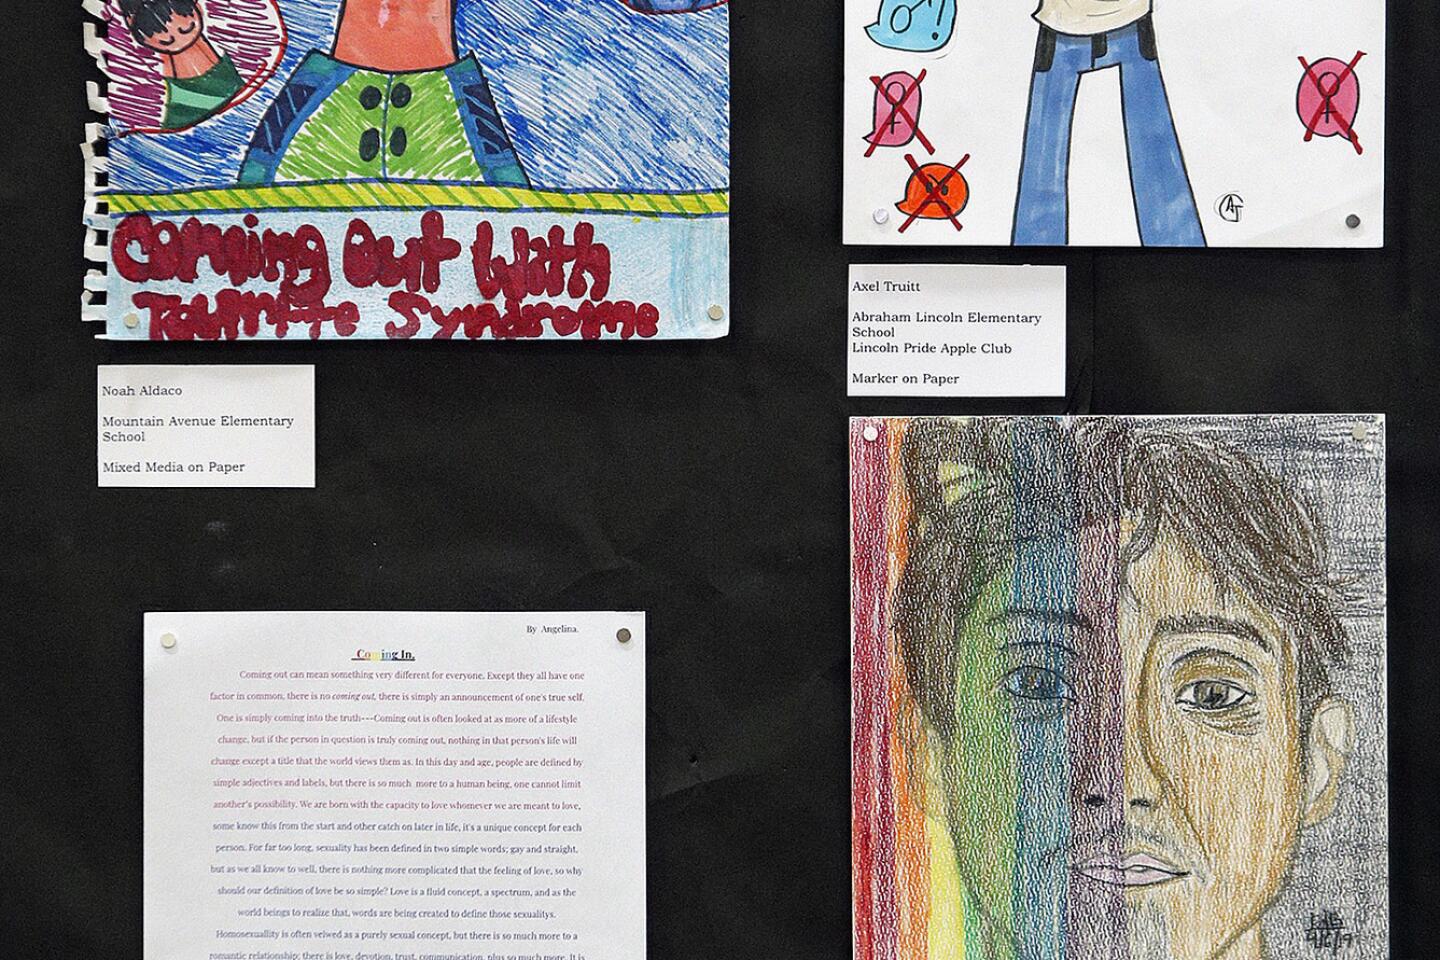 Several Glendale schools, students participate in Pride art showcase